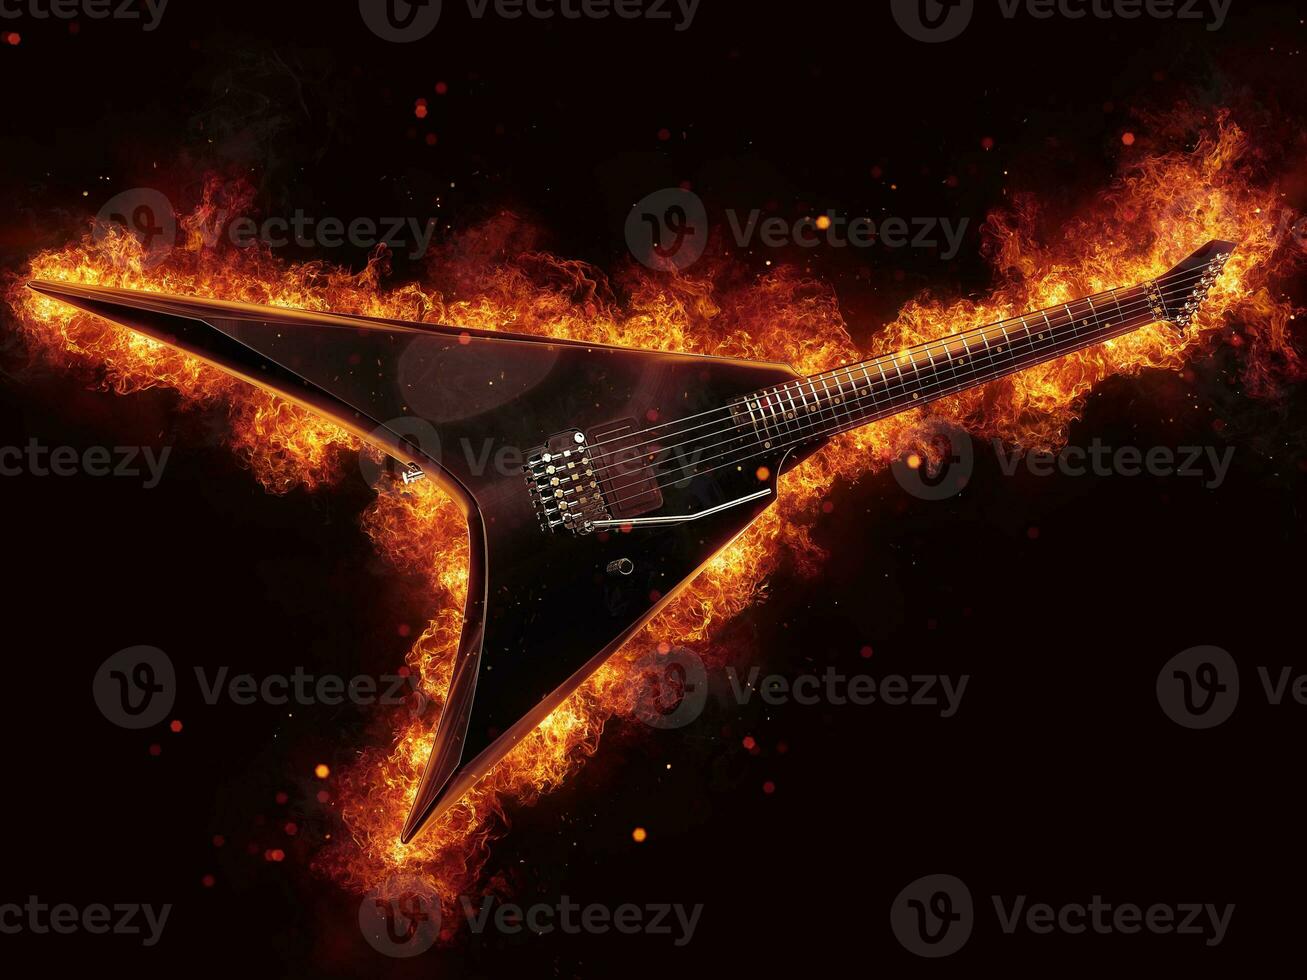 tung metall elektrisk gitarr på brand foto